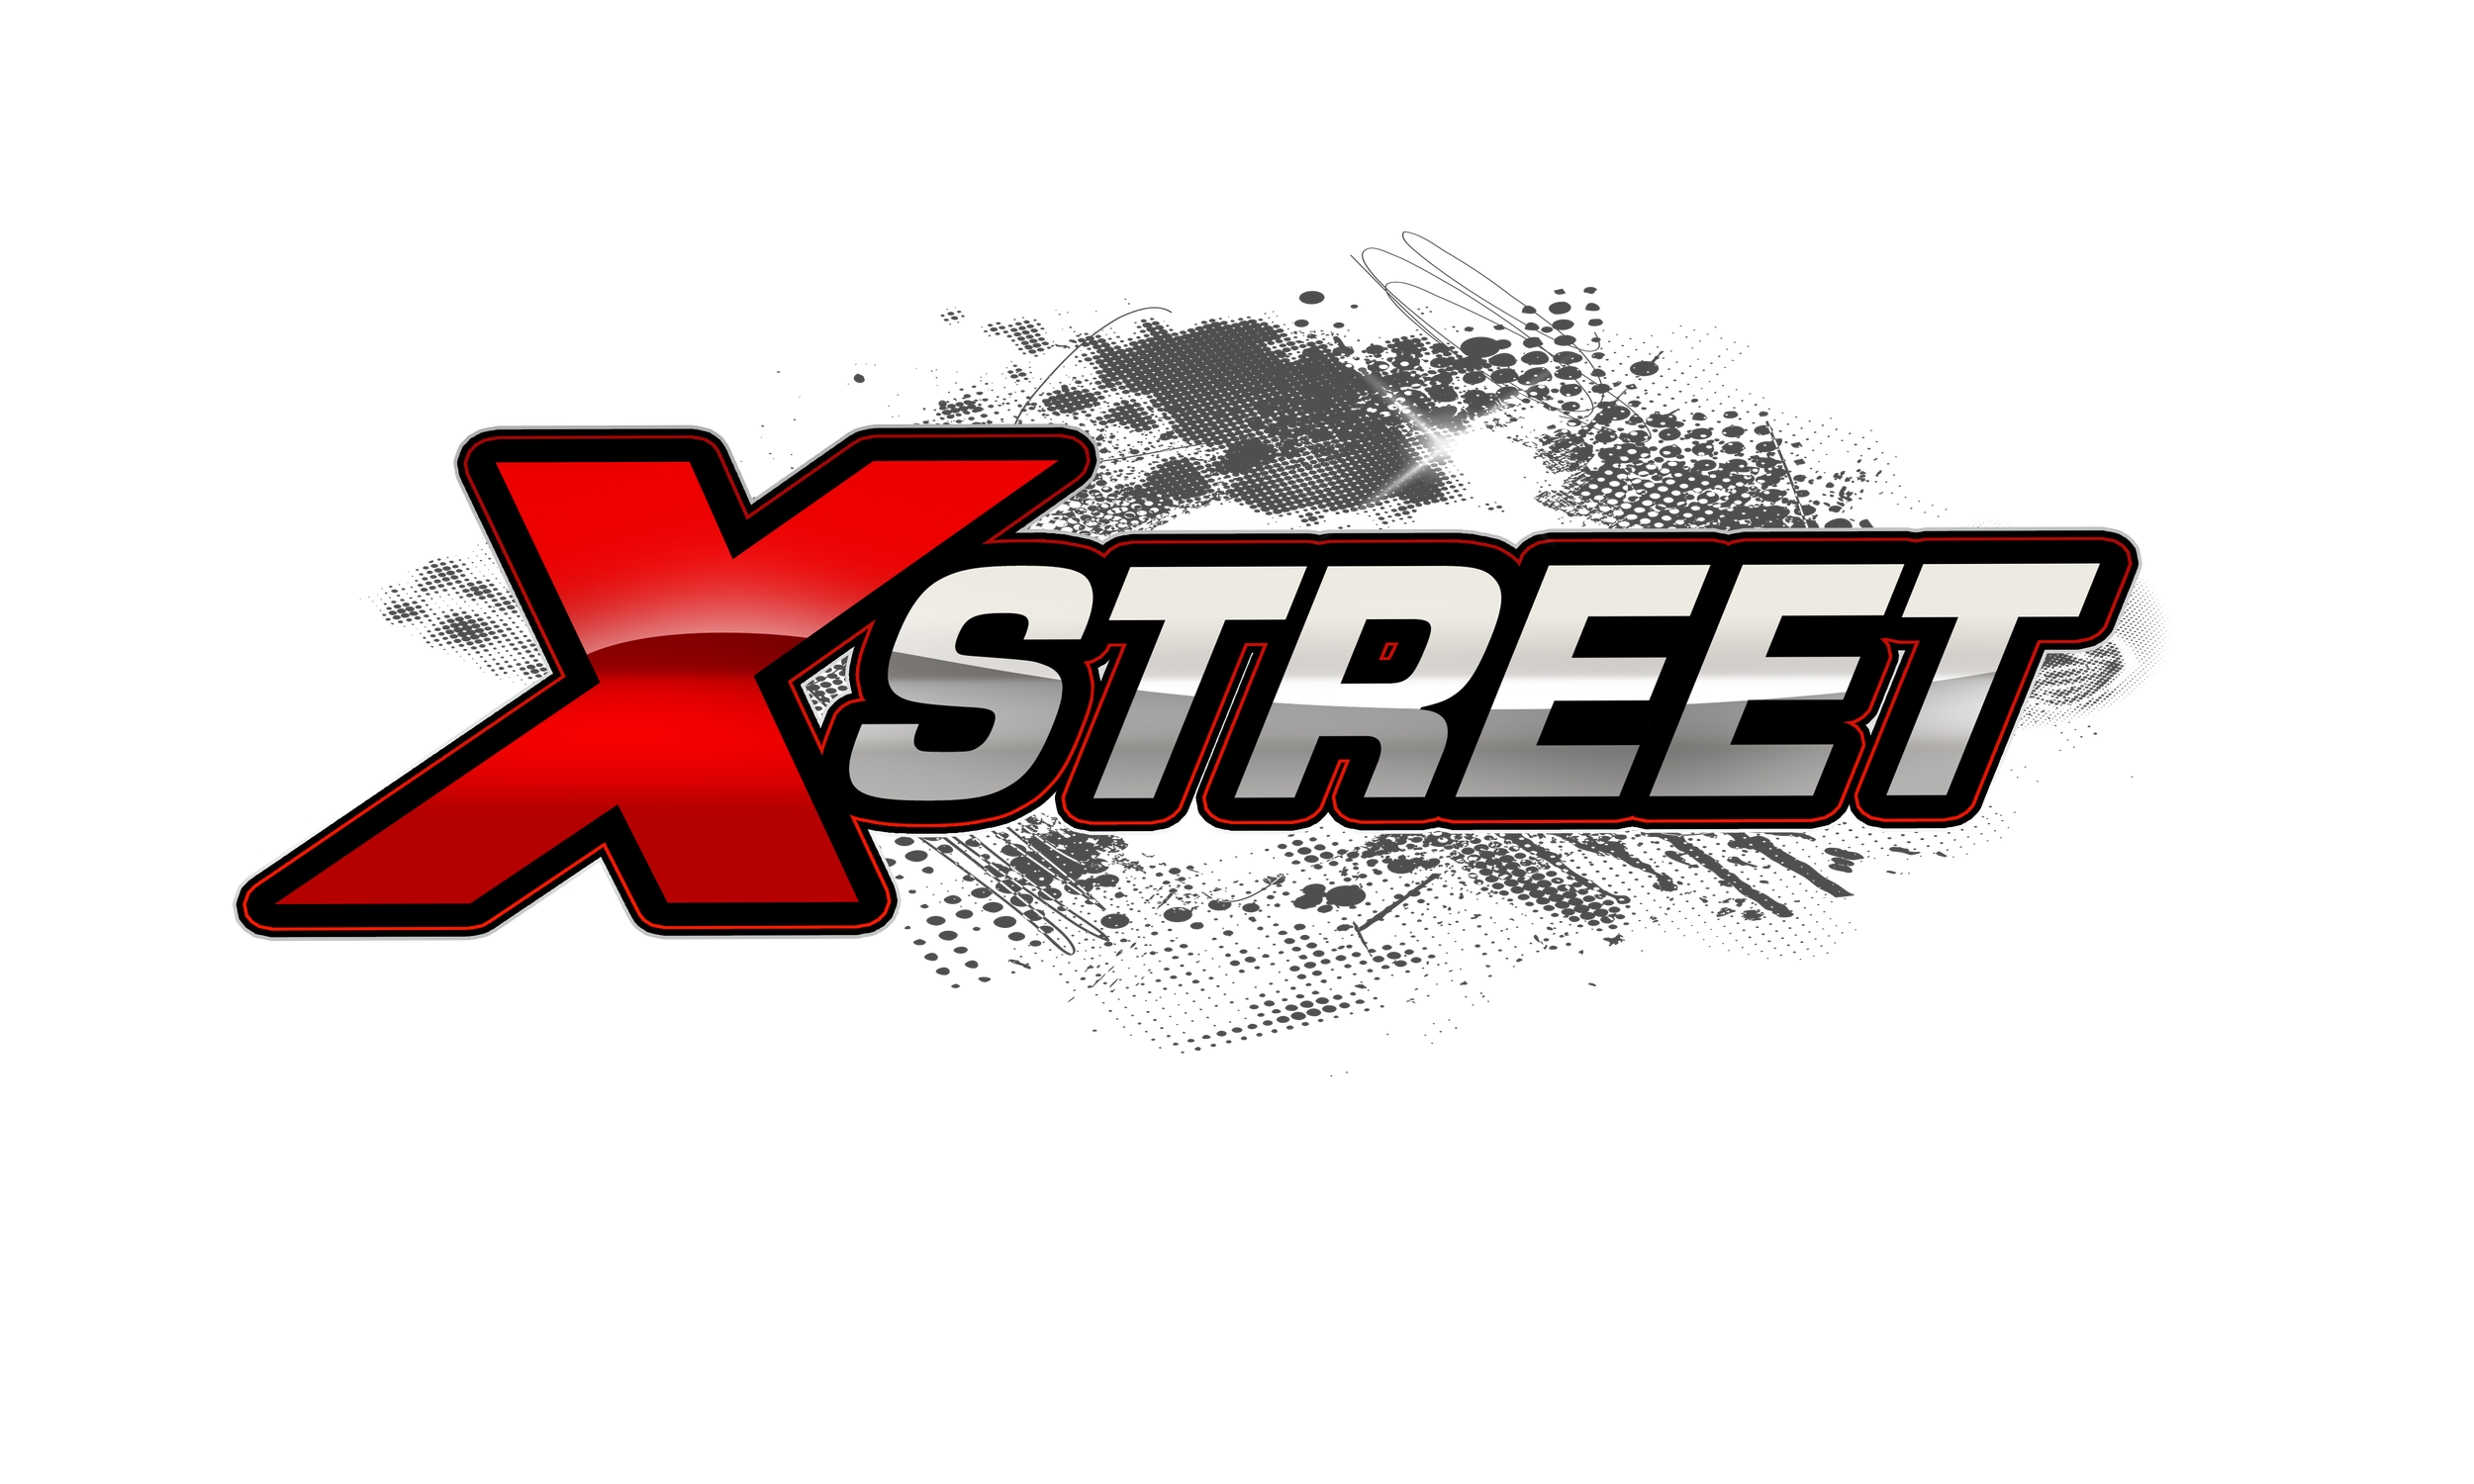 XSTREET logo.png